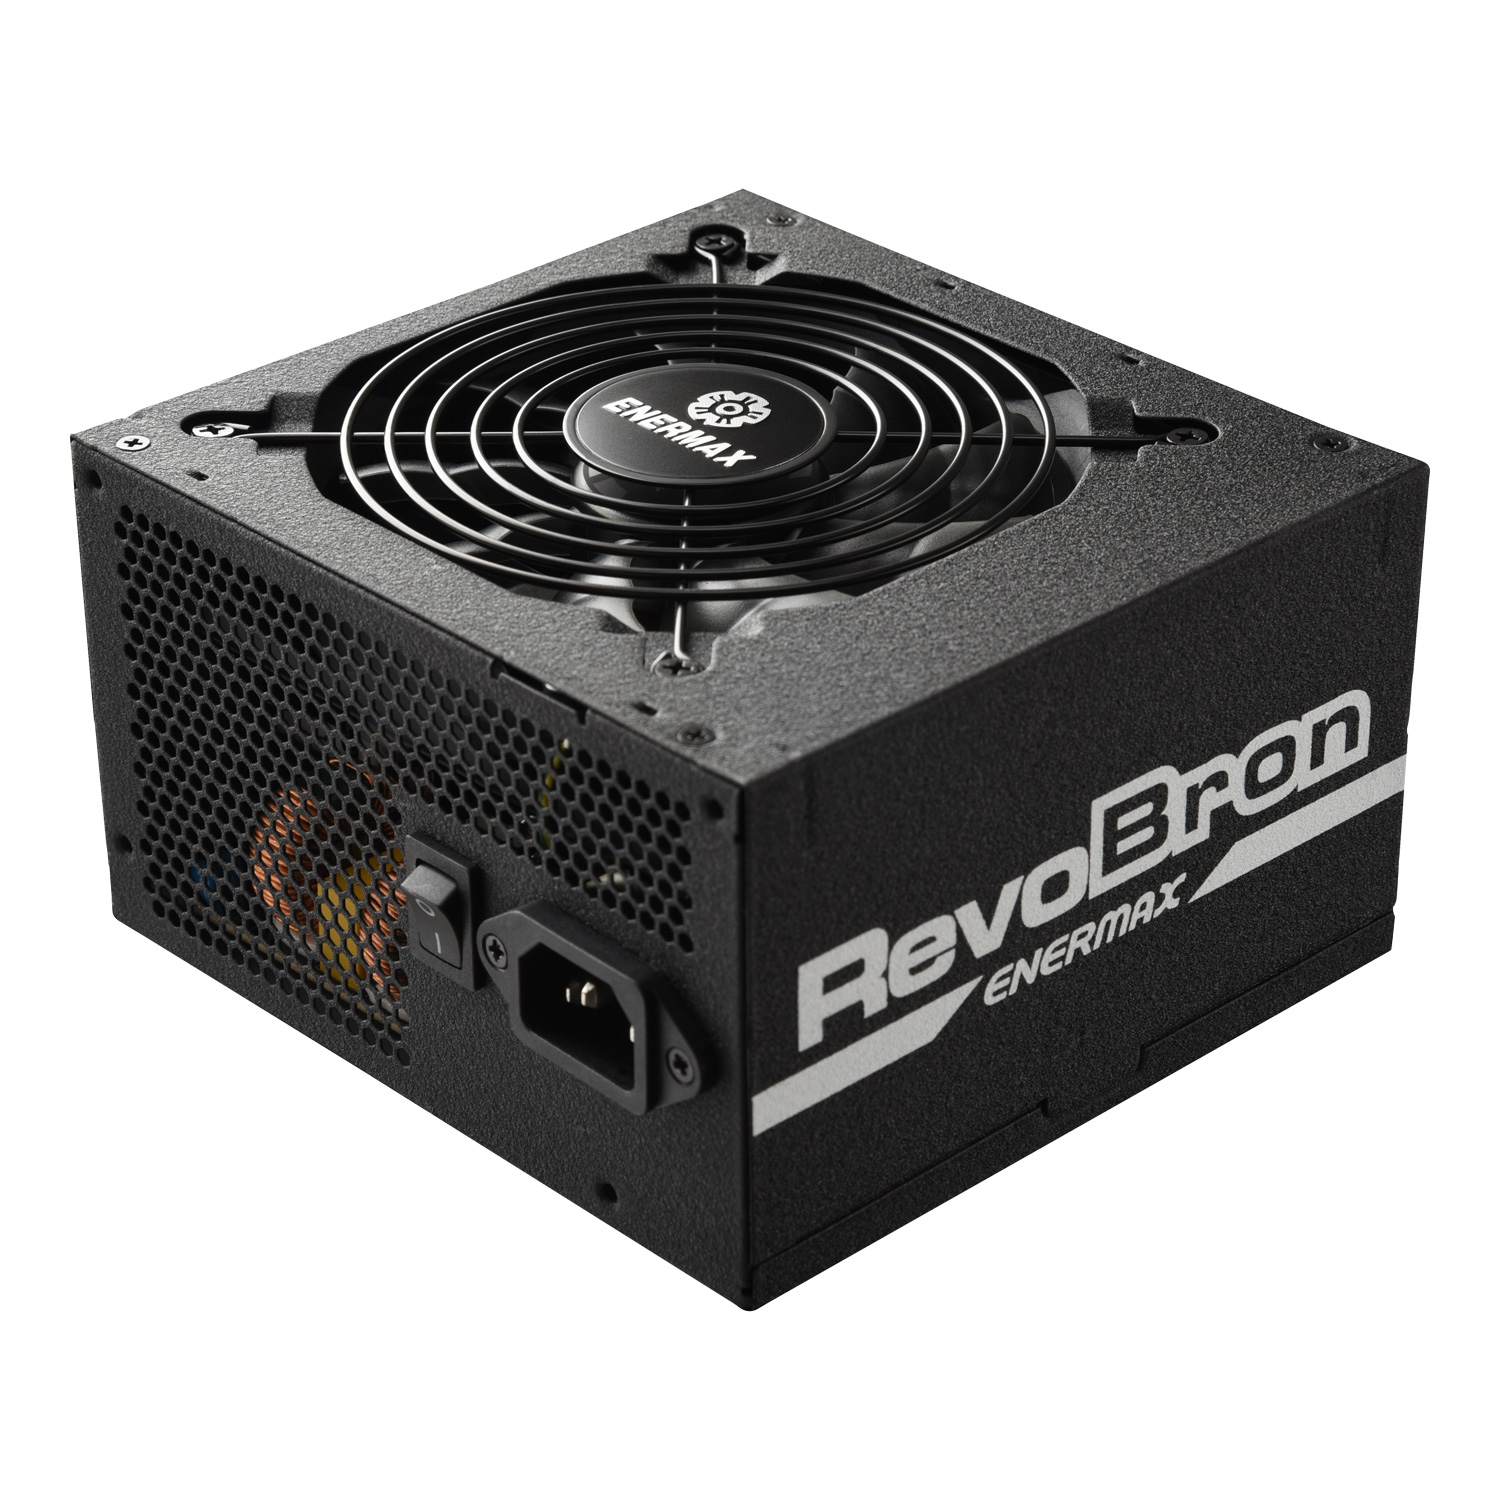 RevoBron 500W